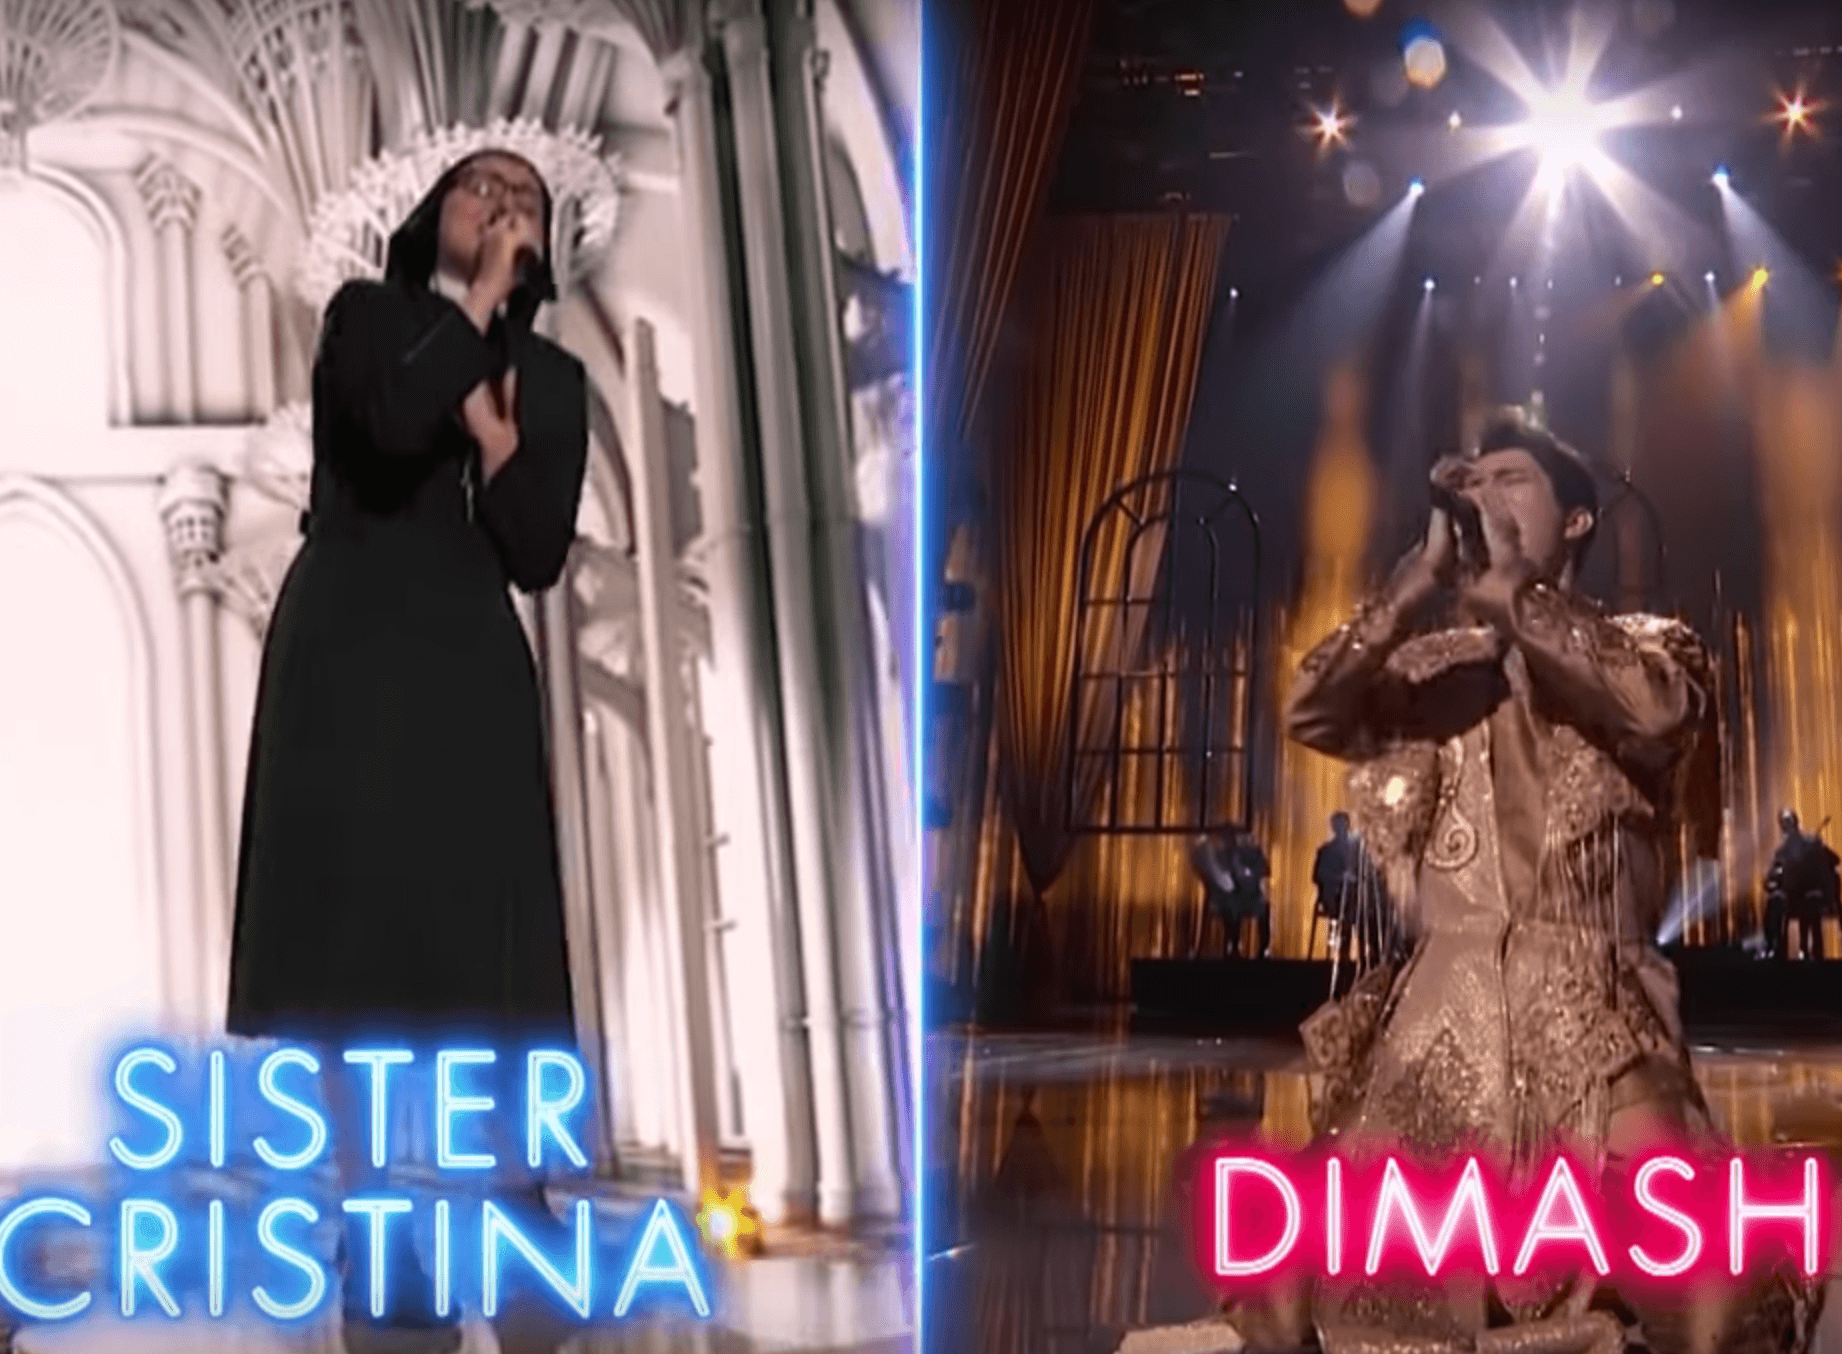 Dimash Sister Christina The Worlds Best